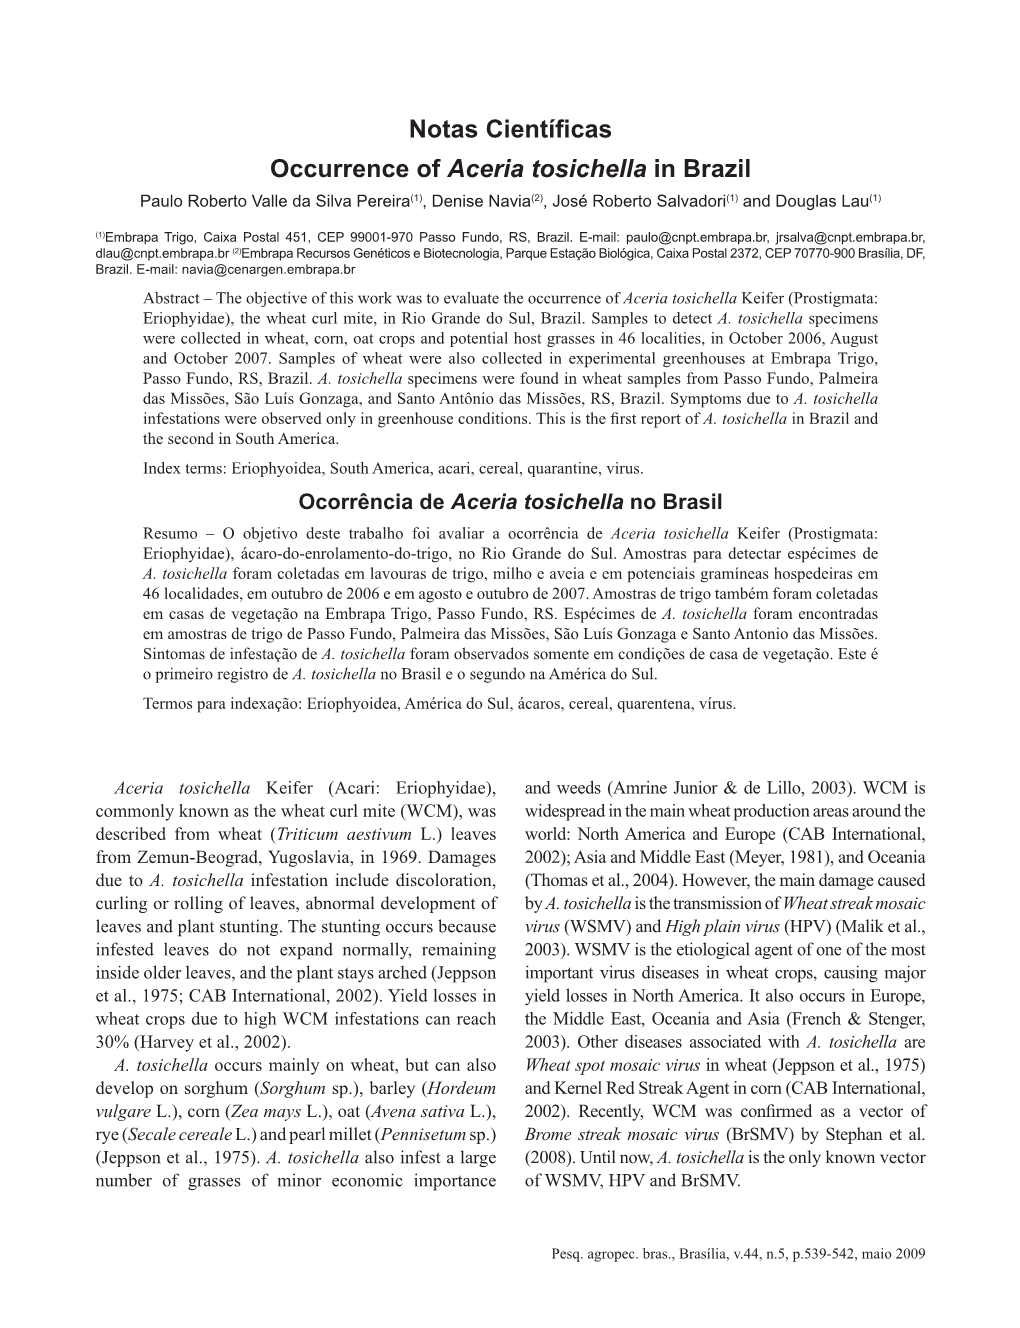 Notas Científicas Occurrence of Aceria Tosichella in Brazil Paulo Roberto Valle Da Silva Pereira(1), Denise Navia(2), José Roberto Salvadori(1) and Douglas Lau(1)